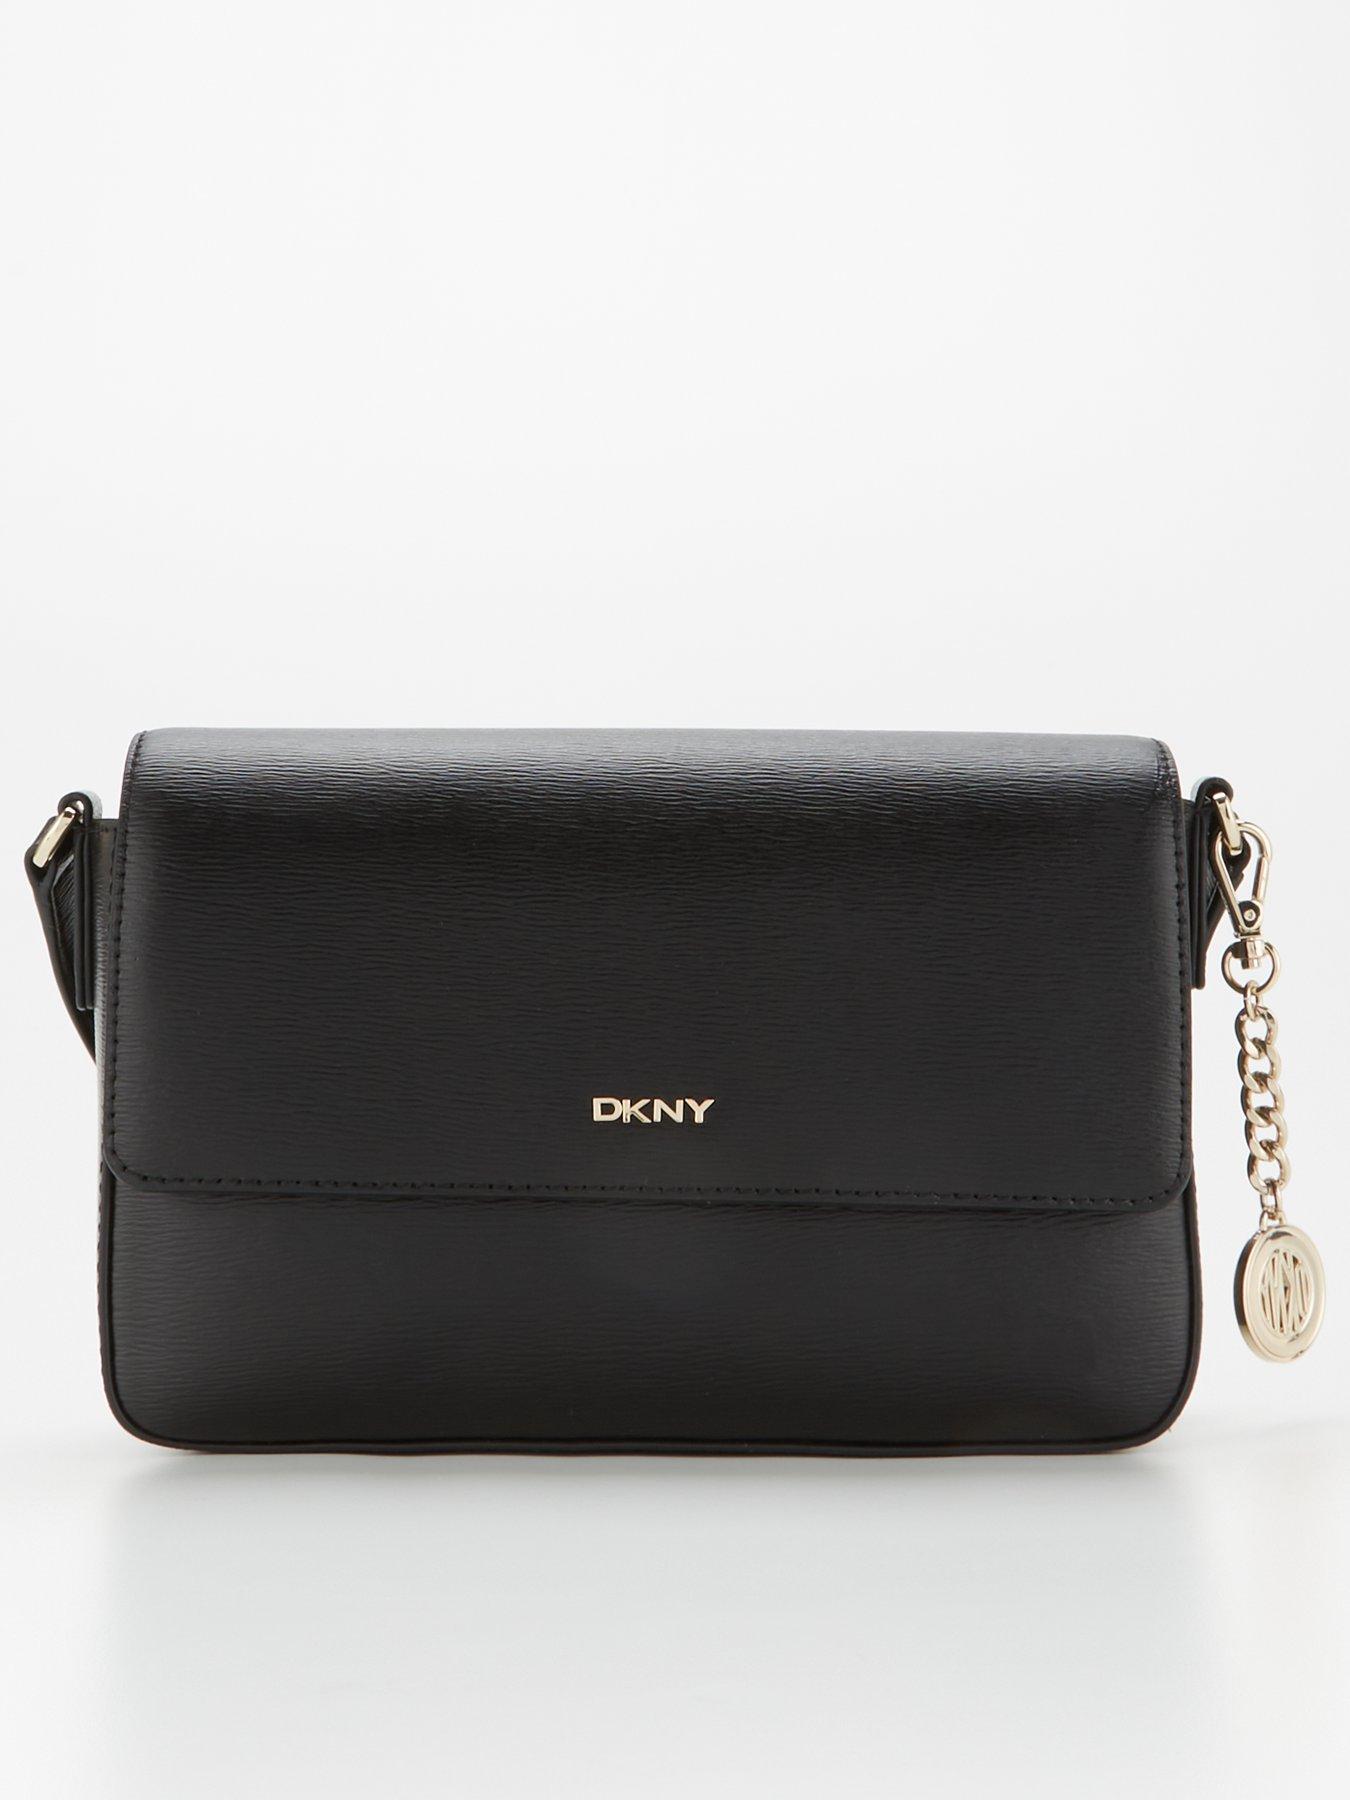 DKNY Bryant Sutton Medium Crossbody Bag - Black